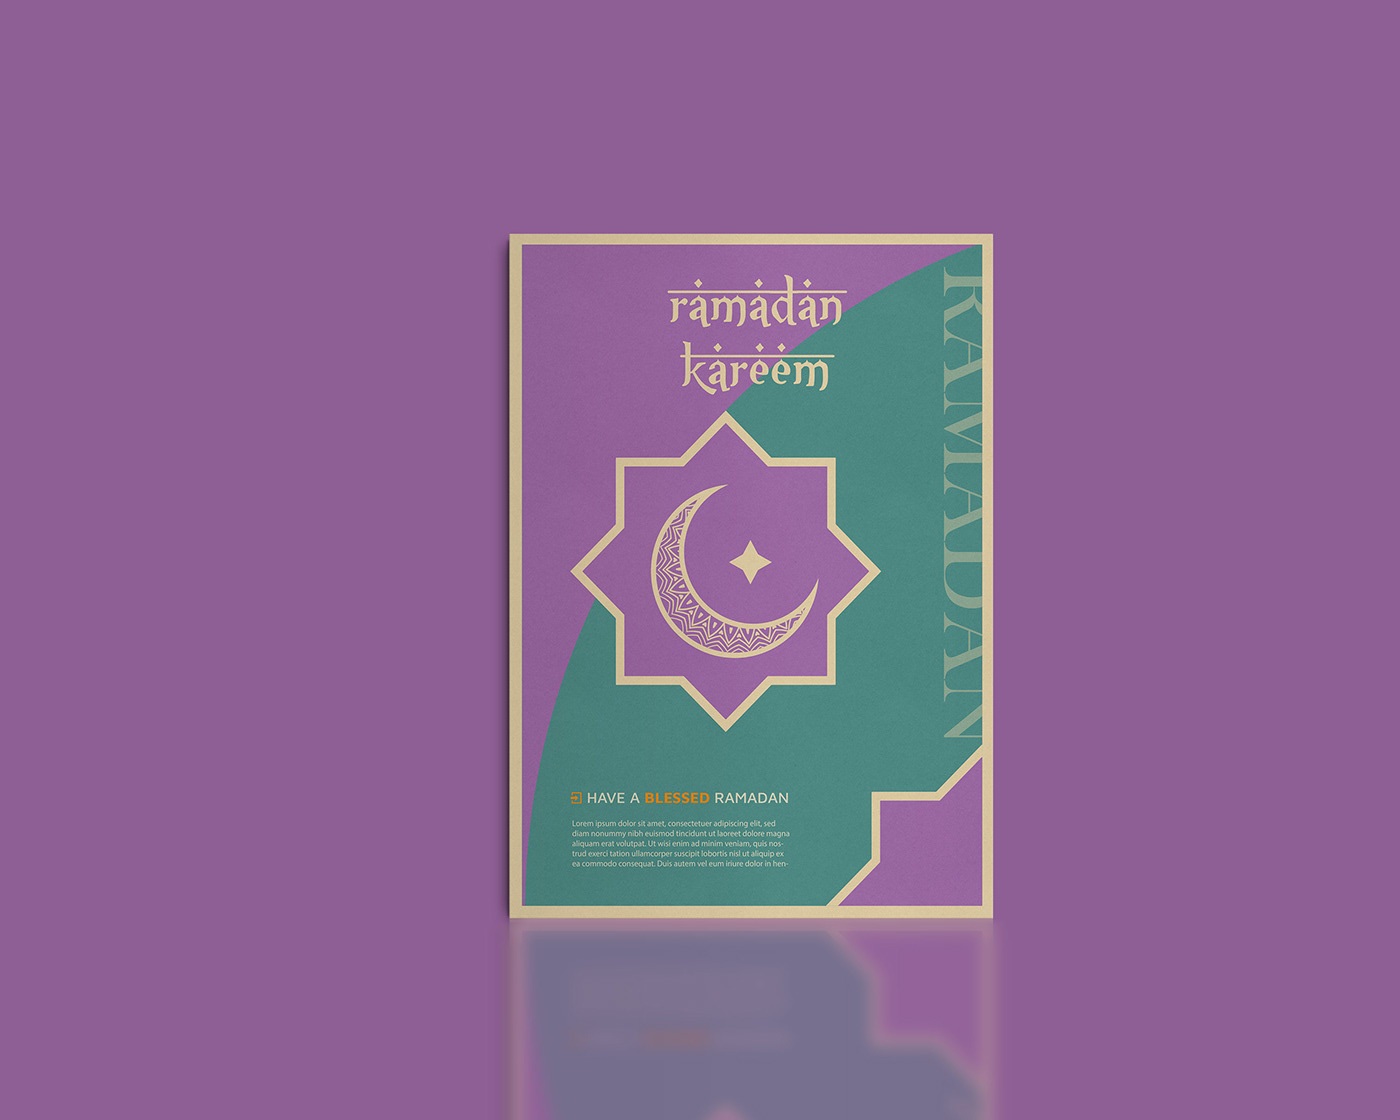 A stylized Ramadan greeting card design featuring a purple background